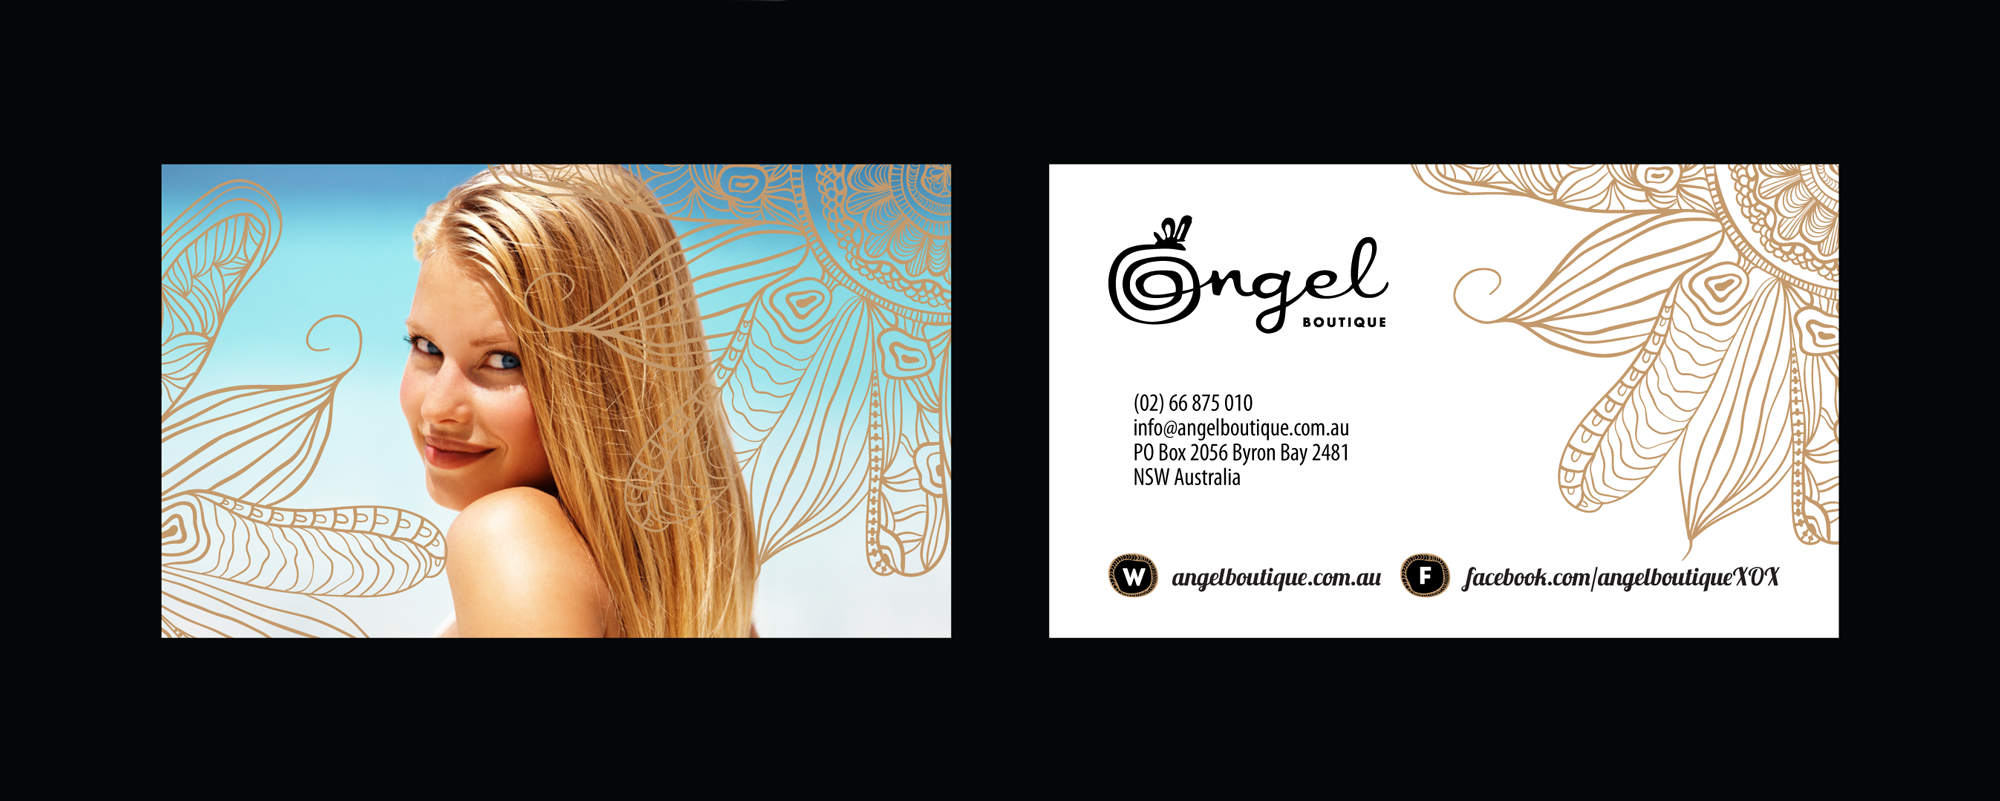 Angel_boutique_business_card_design.png